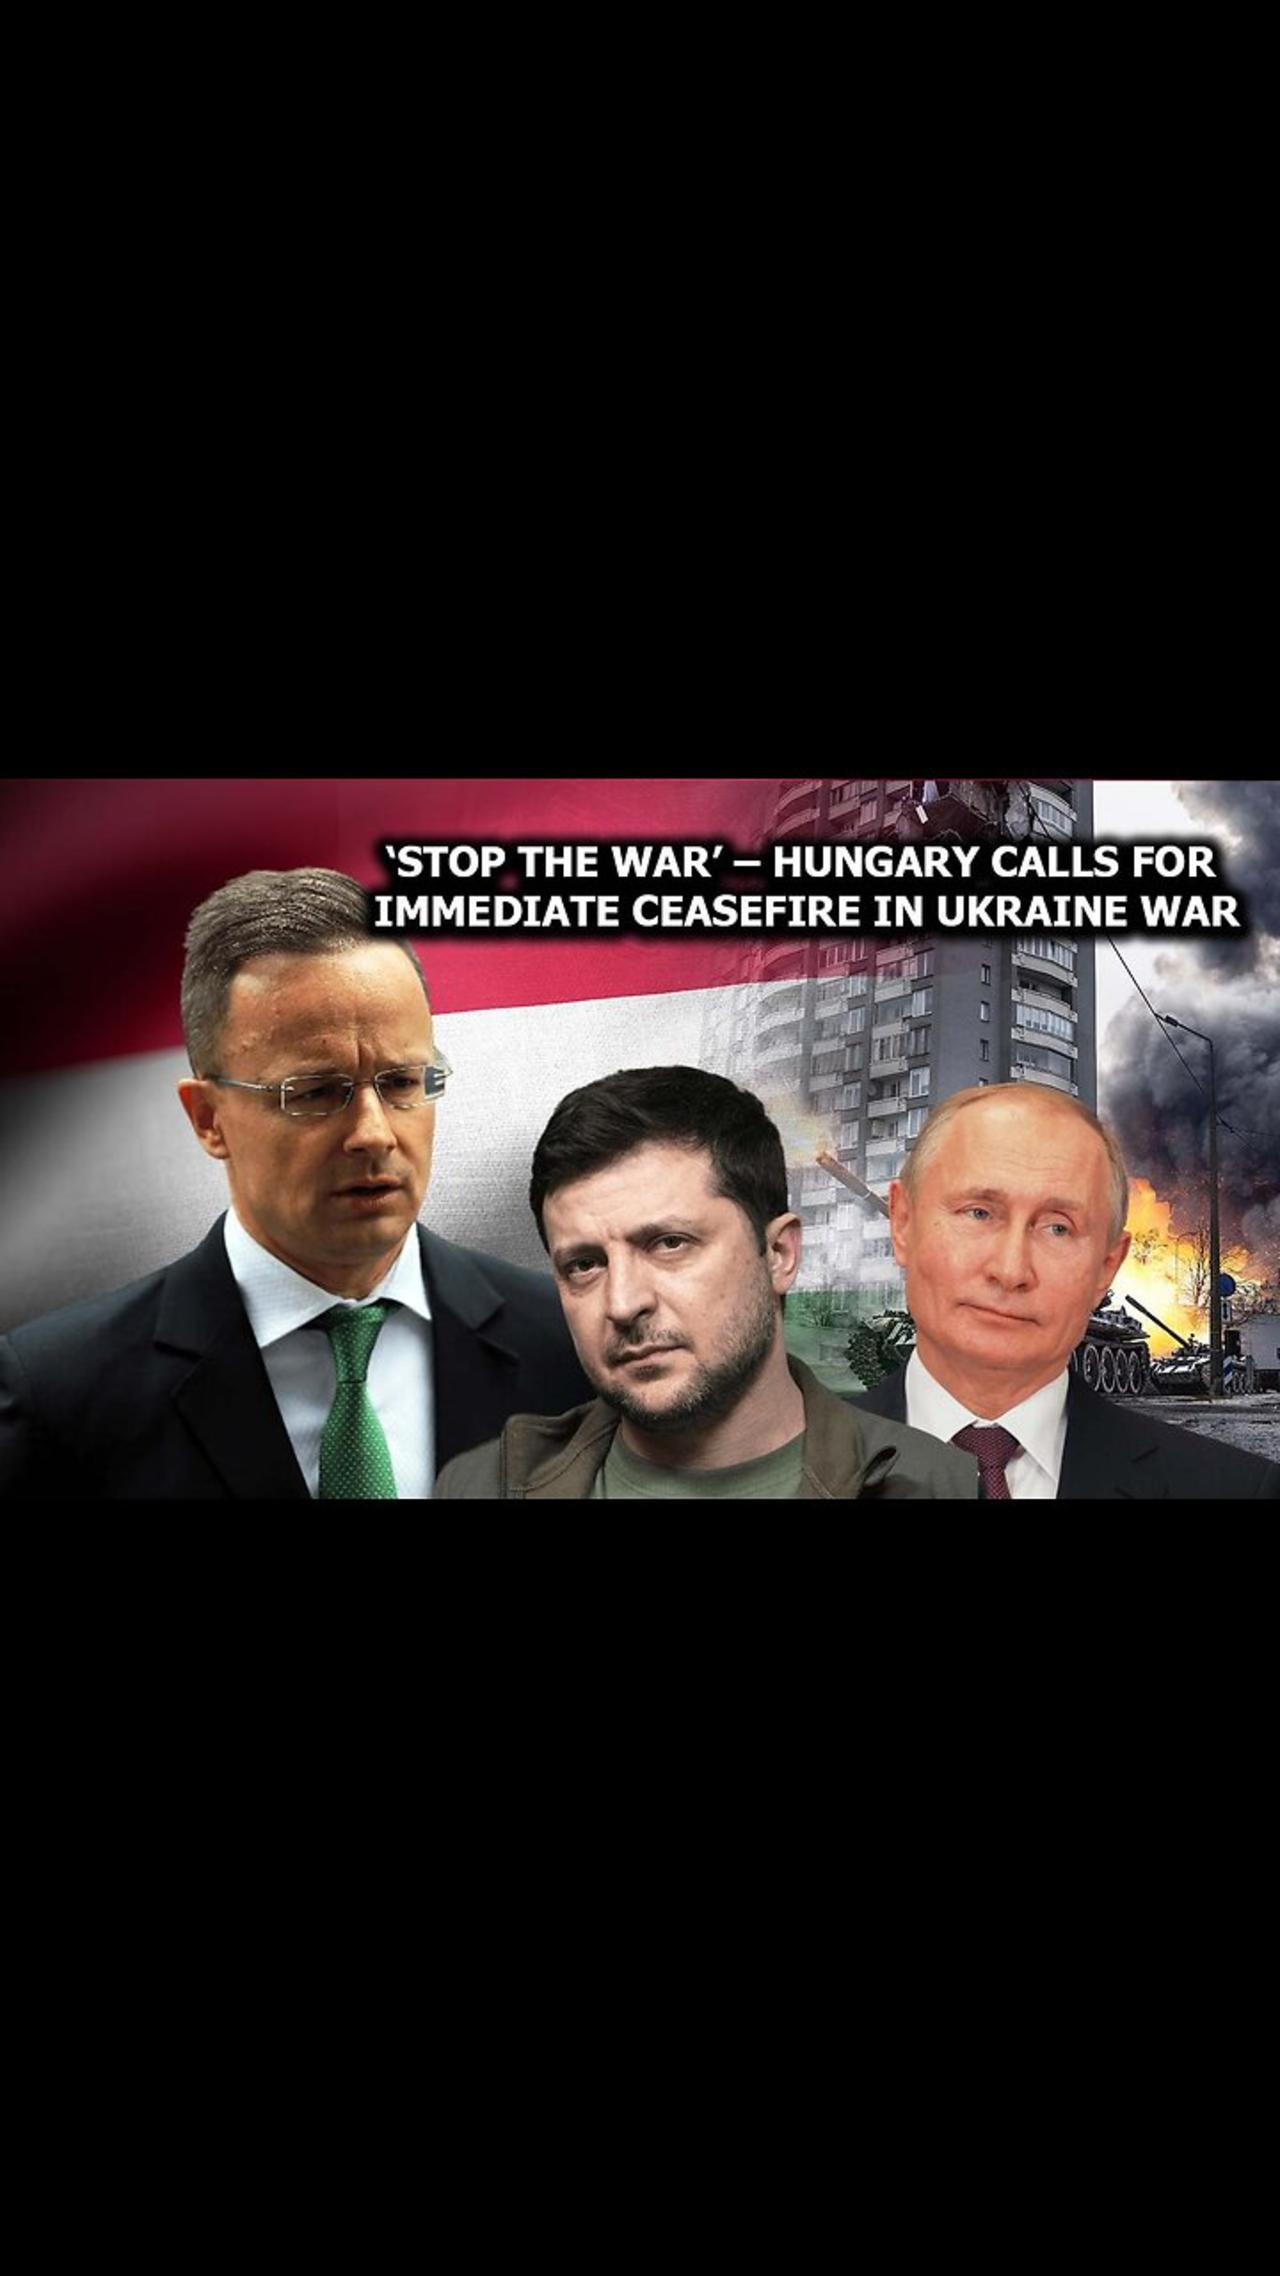 ‘Stop the war’ – Hungary calls for immediate ceasefire in Ukraine war